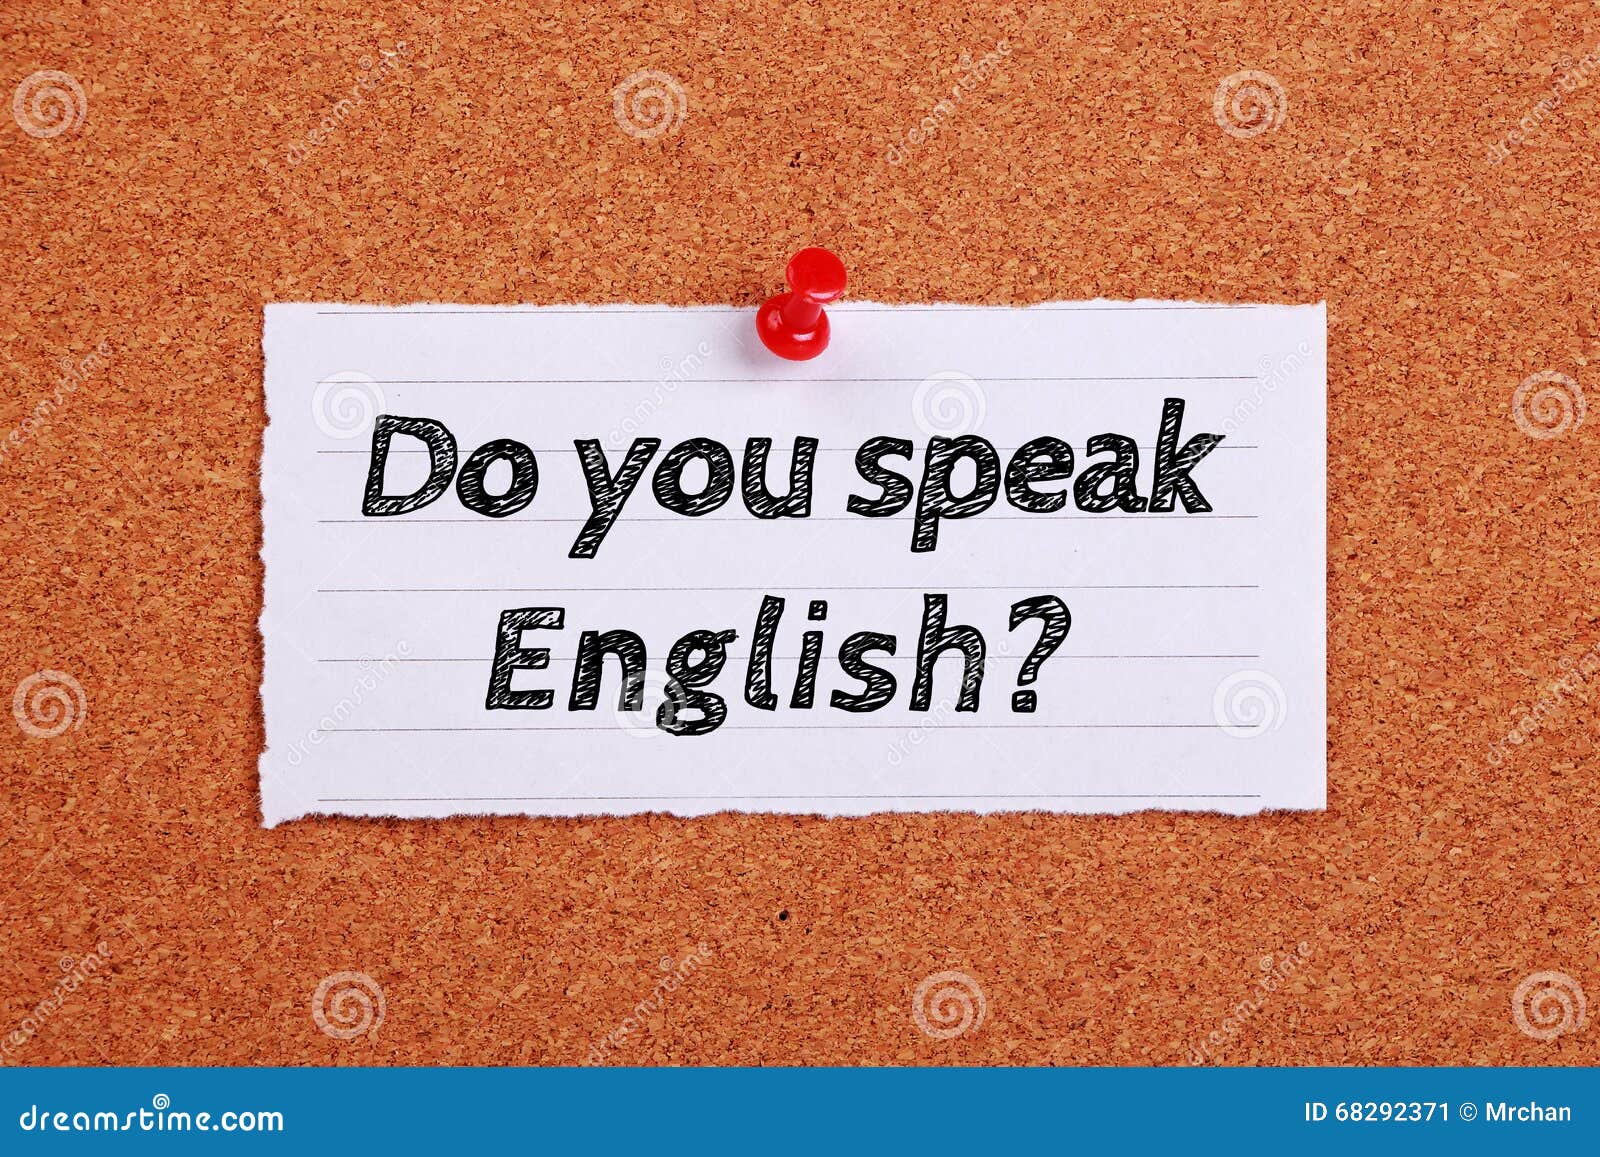 Can you speak english now. Speak English. Был you speak English. Do you speak English конечно. Do you speak English картинки.